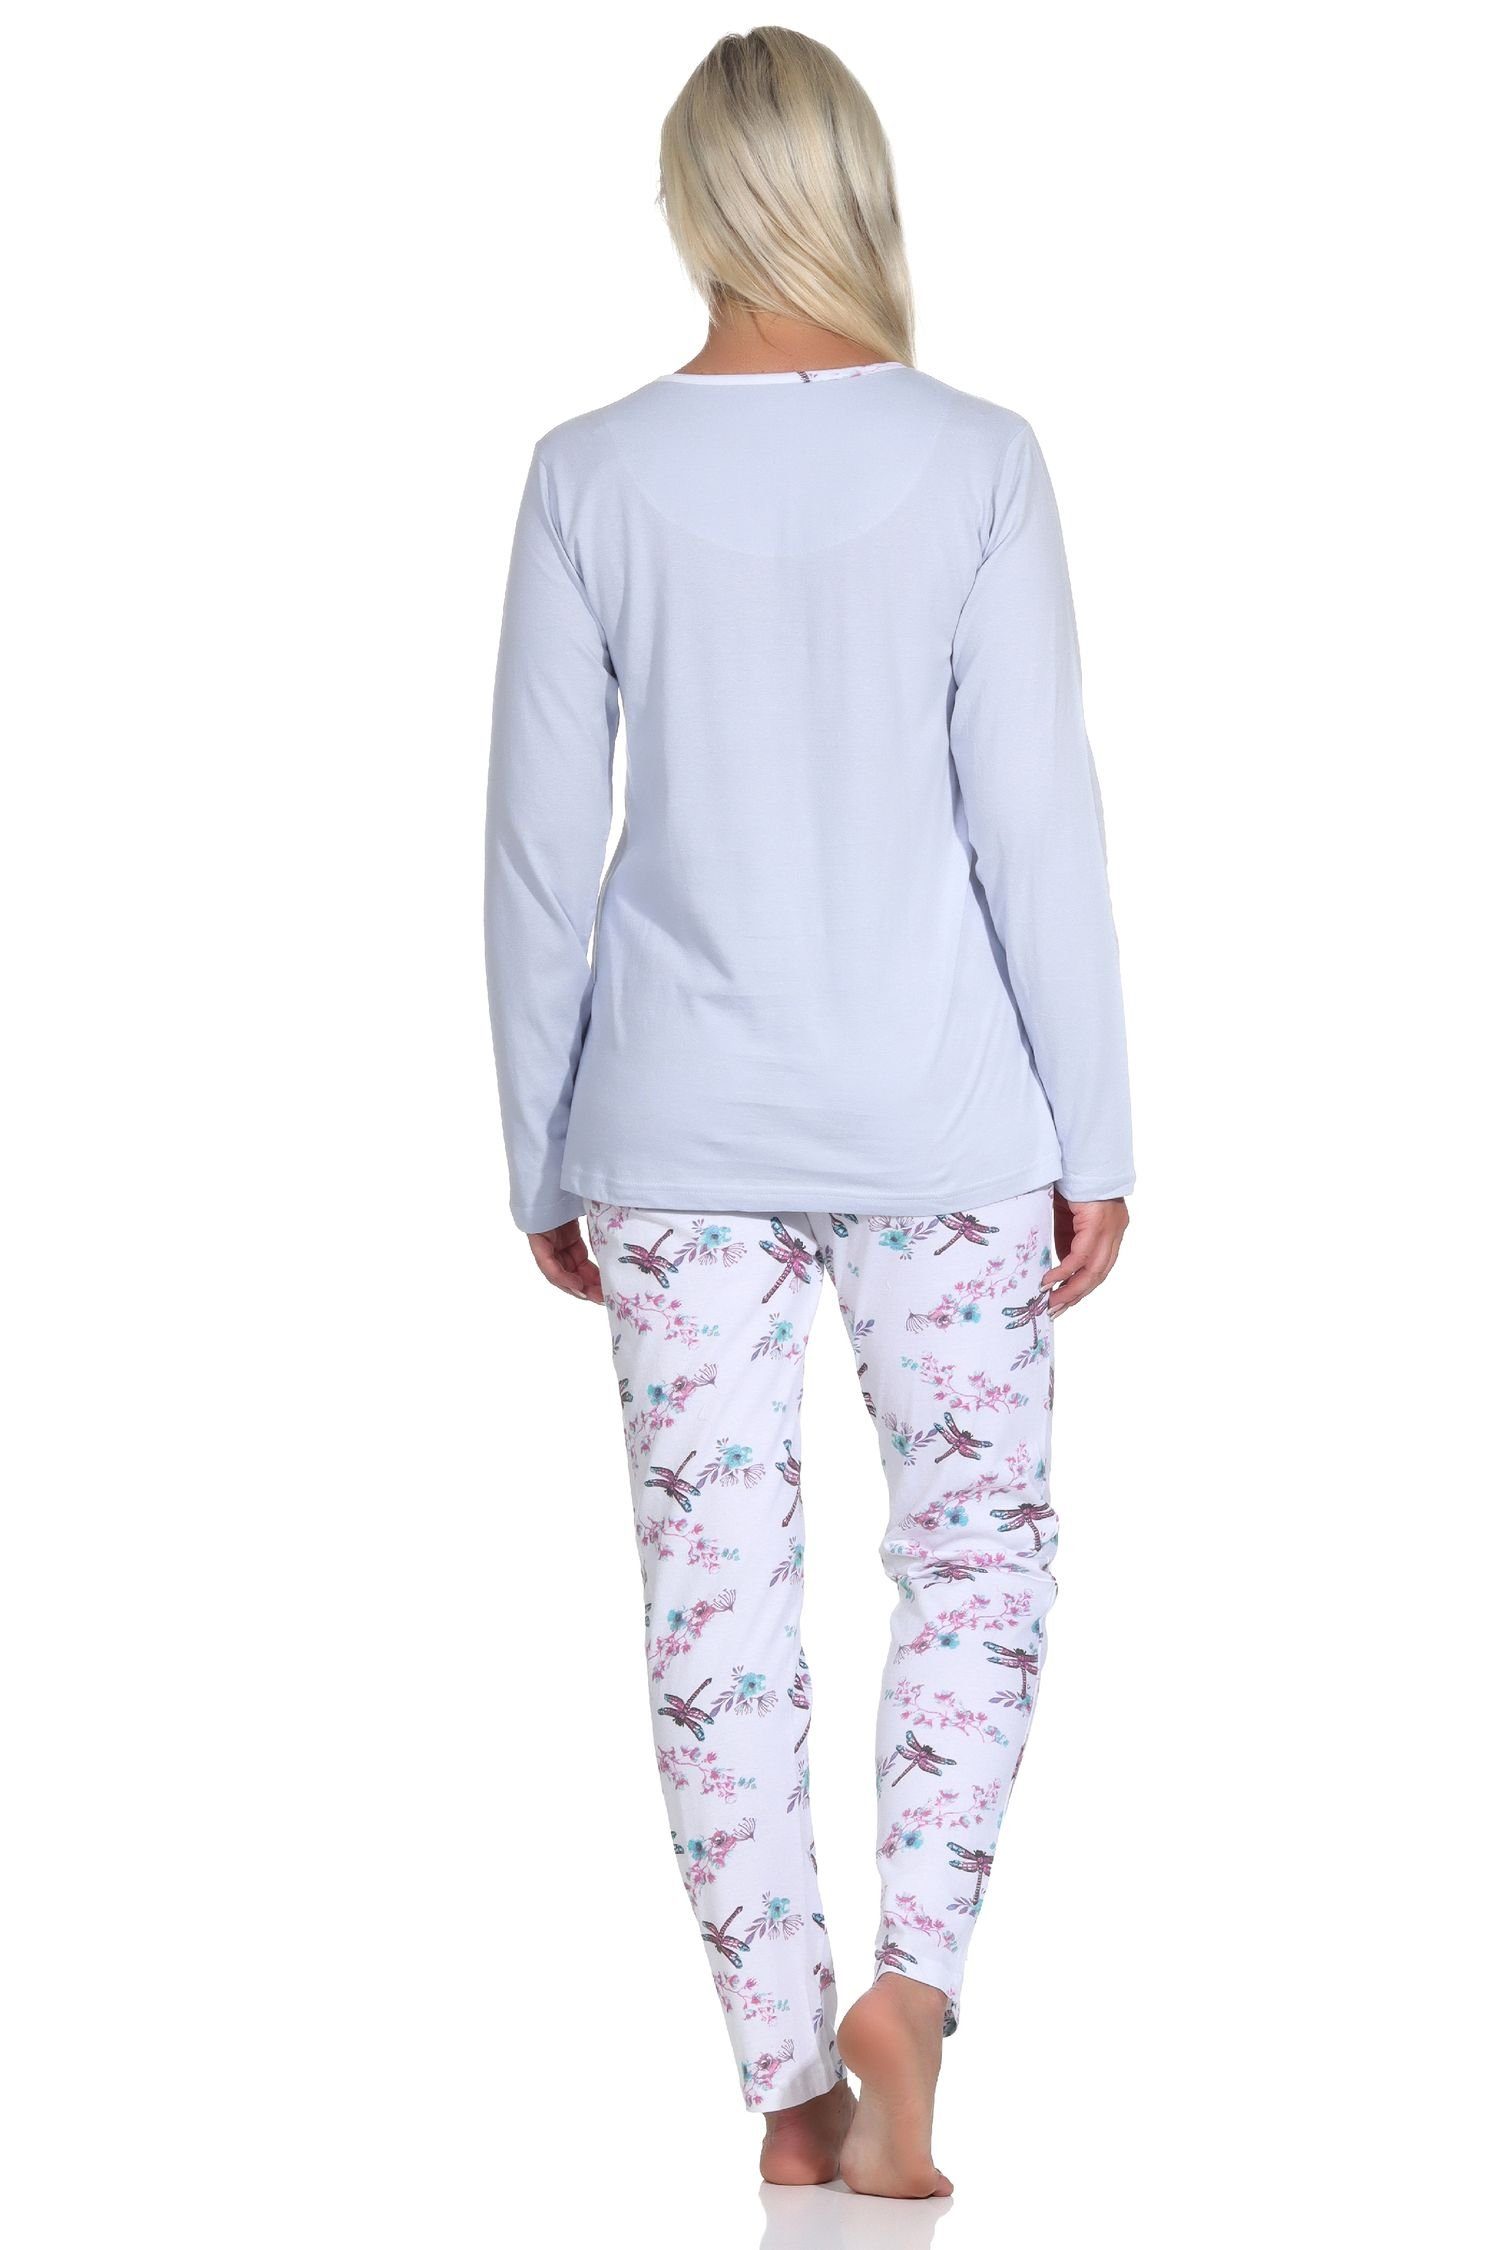 langarm hellblau Normann floralem mit Pyjamahose Print Pyjama Schlafanzug Pyjama in Damen